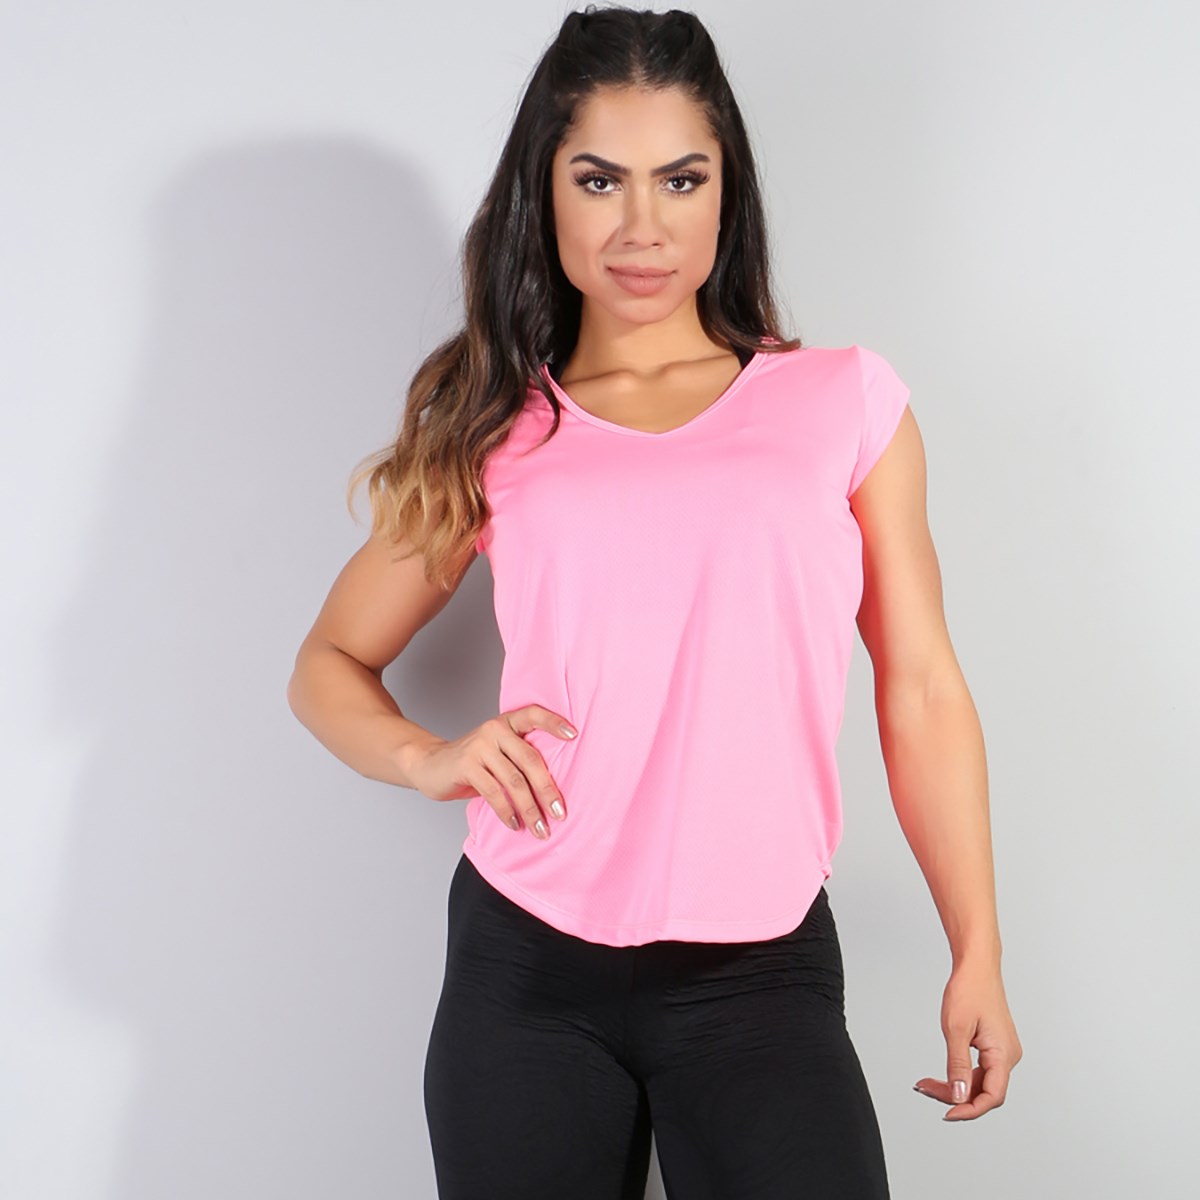 Blusa Fitness Feminina em Dry Fit Rosa Neon | Ref: 3.3.2159-39